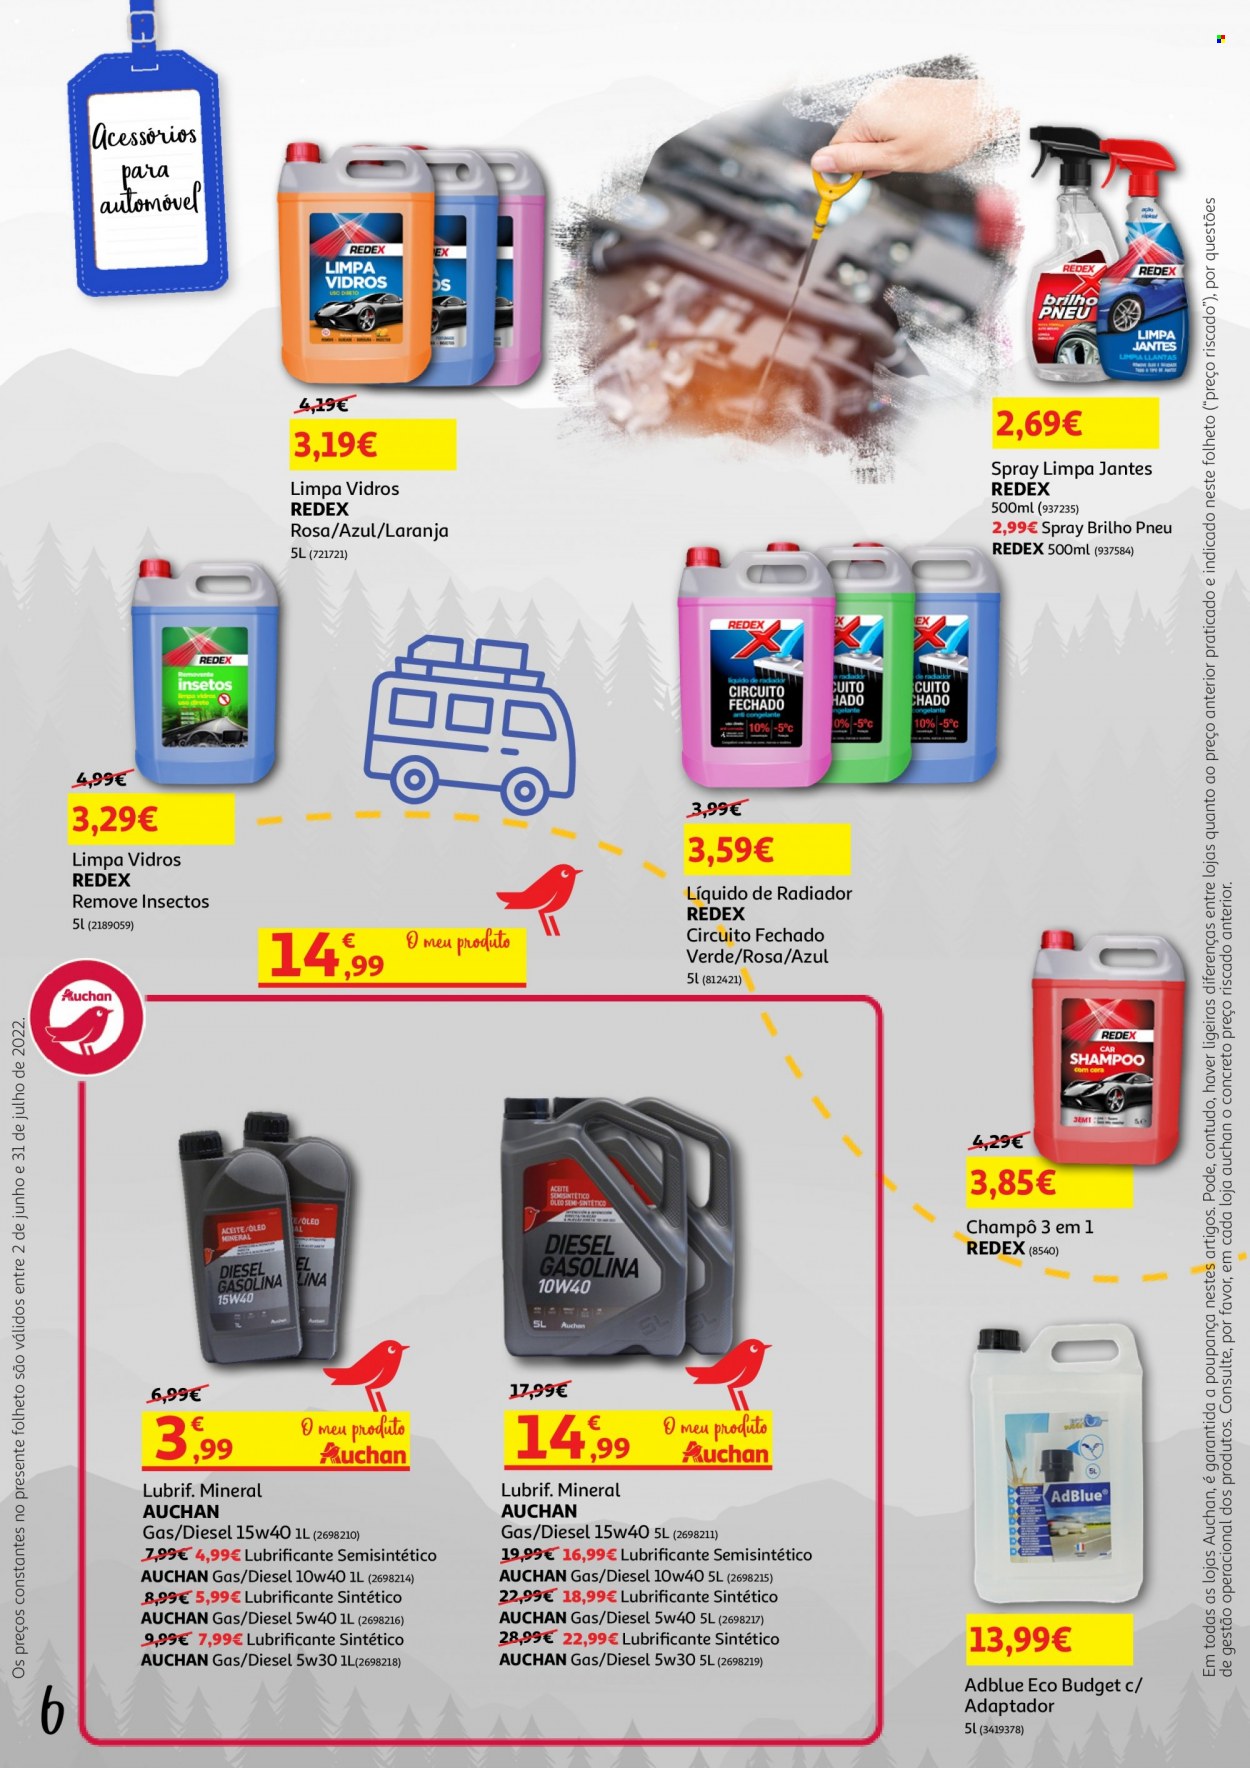 Folheto Auchan - 6.6.2022 - 31.7.2022 - Produtos em promoção - laranja, limpa vidros, shampoo, Diesel, Redex. Página 6.